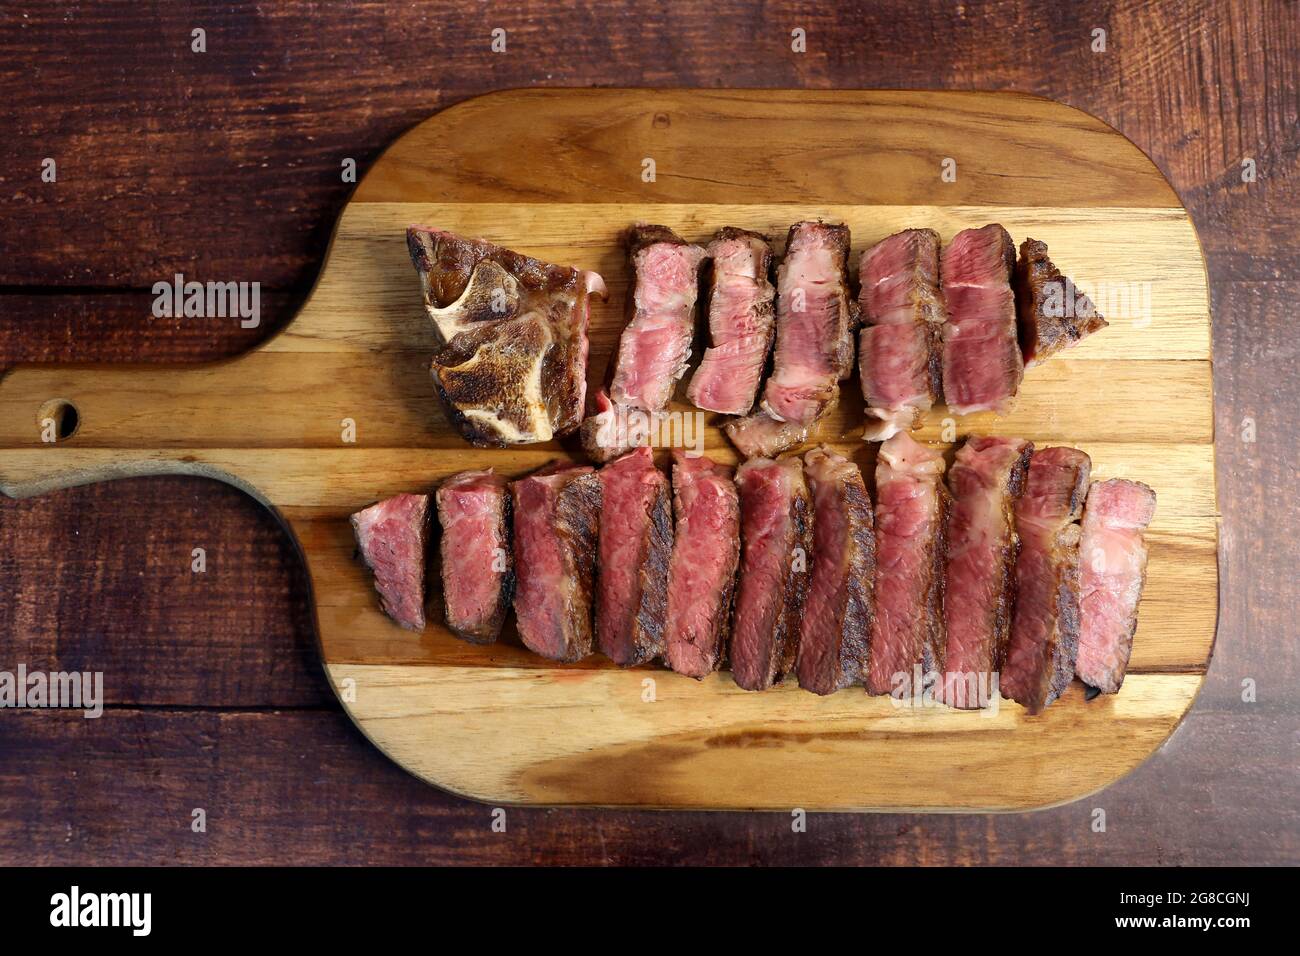 Short Rib or Costela Premium. Beautiful Steak sliced on a wooden board. Rare Steak sliced. Stock Photo